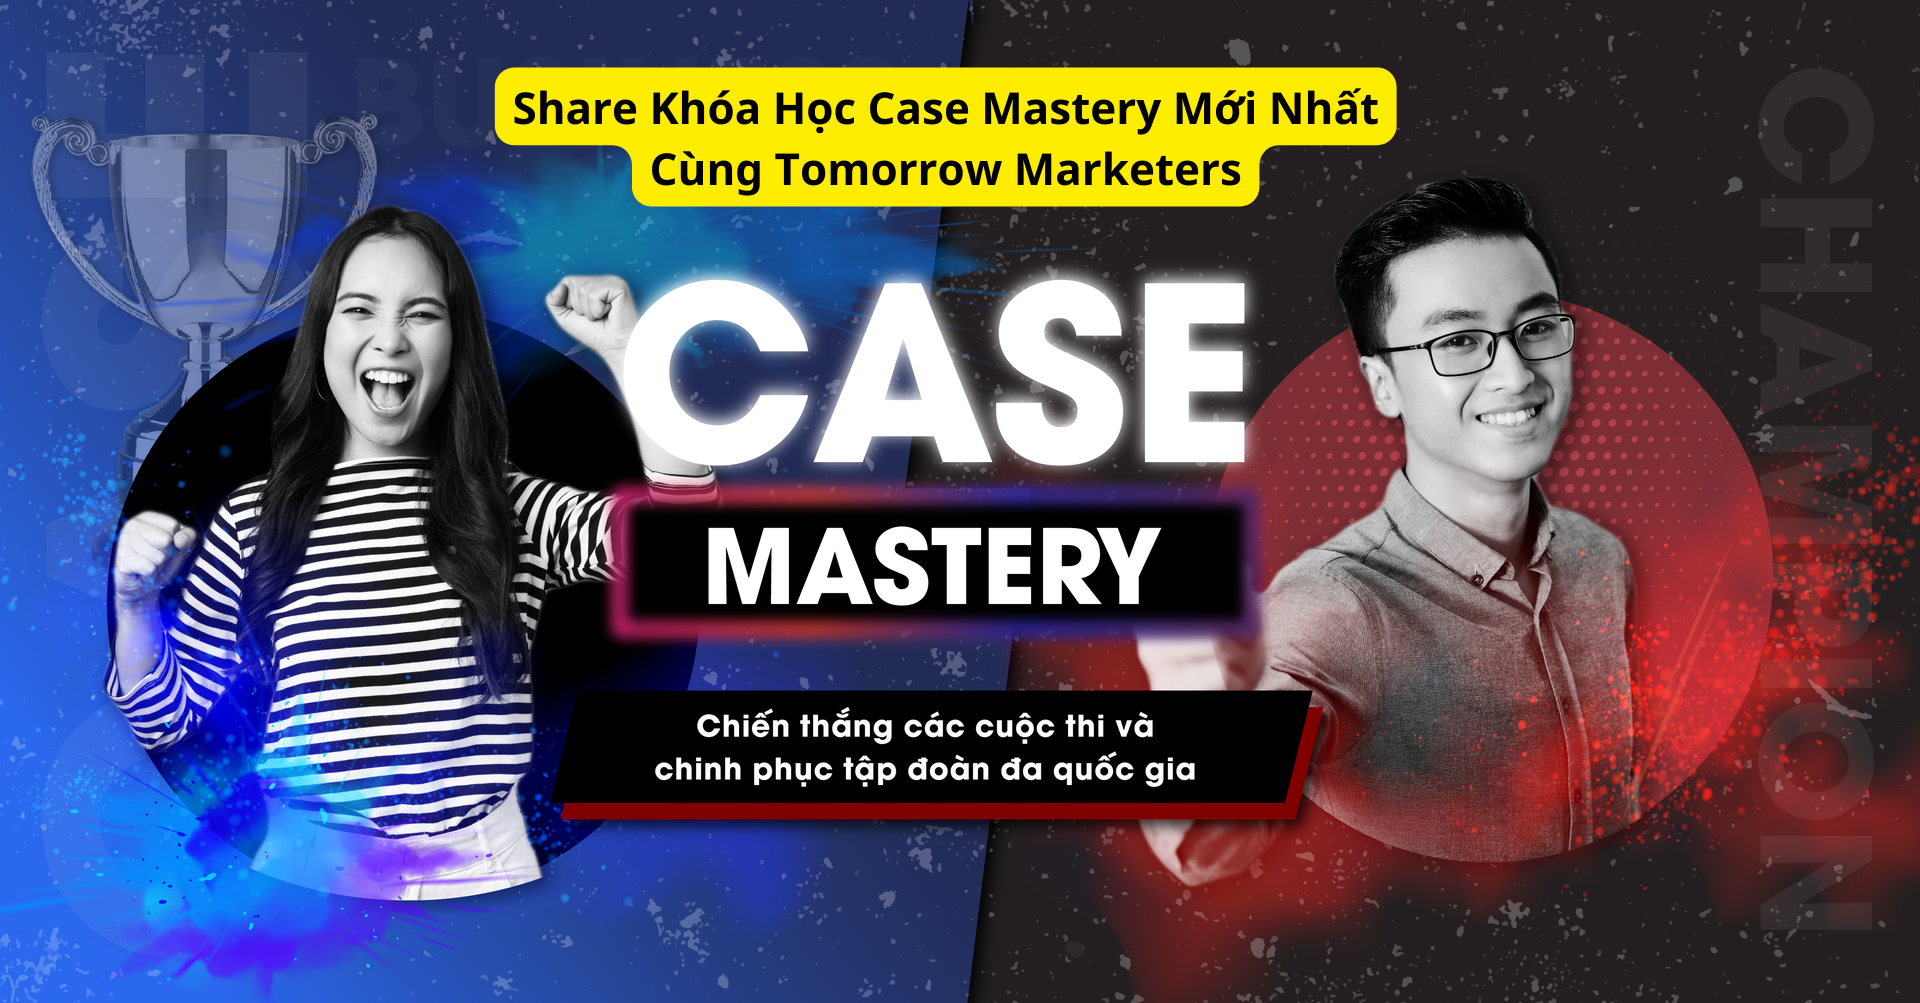 share khoa hoc giai case - case mastery moi nhat cung tomorrow marketers